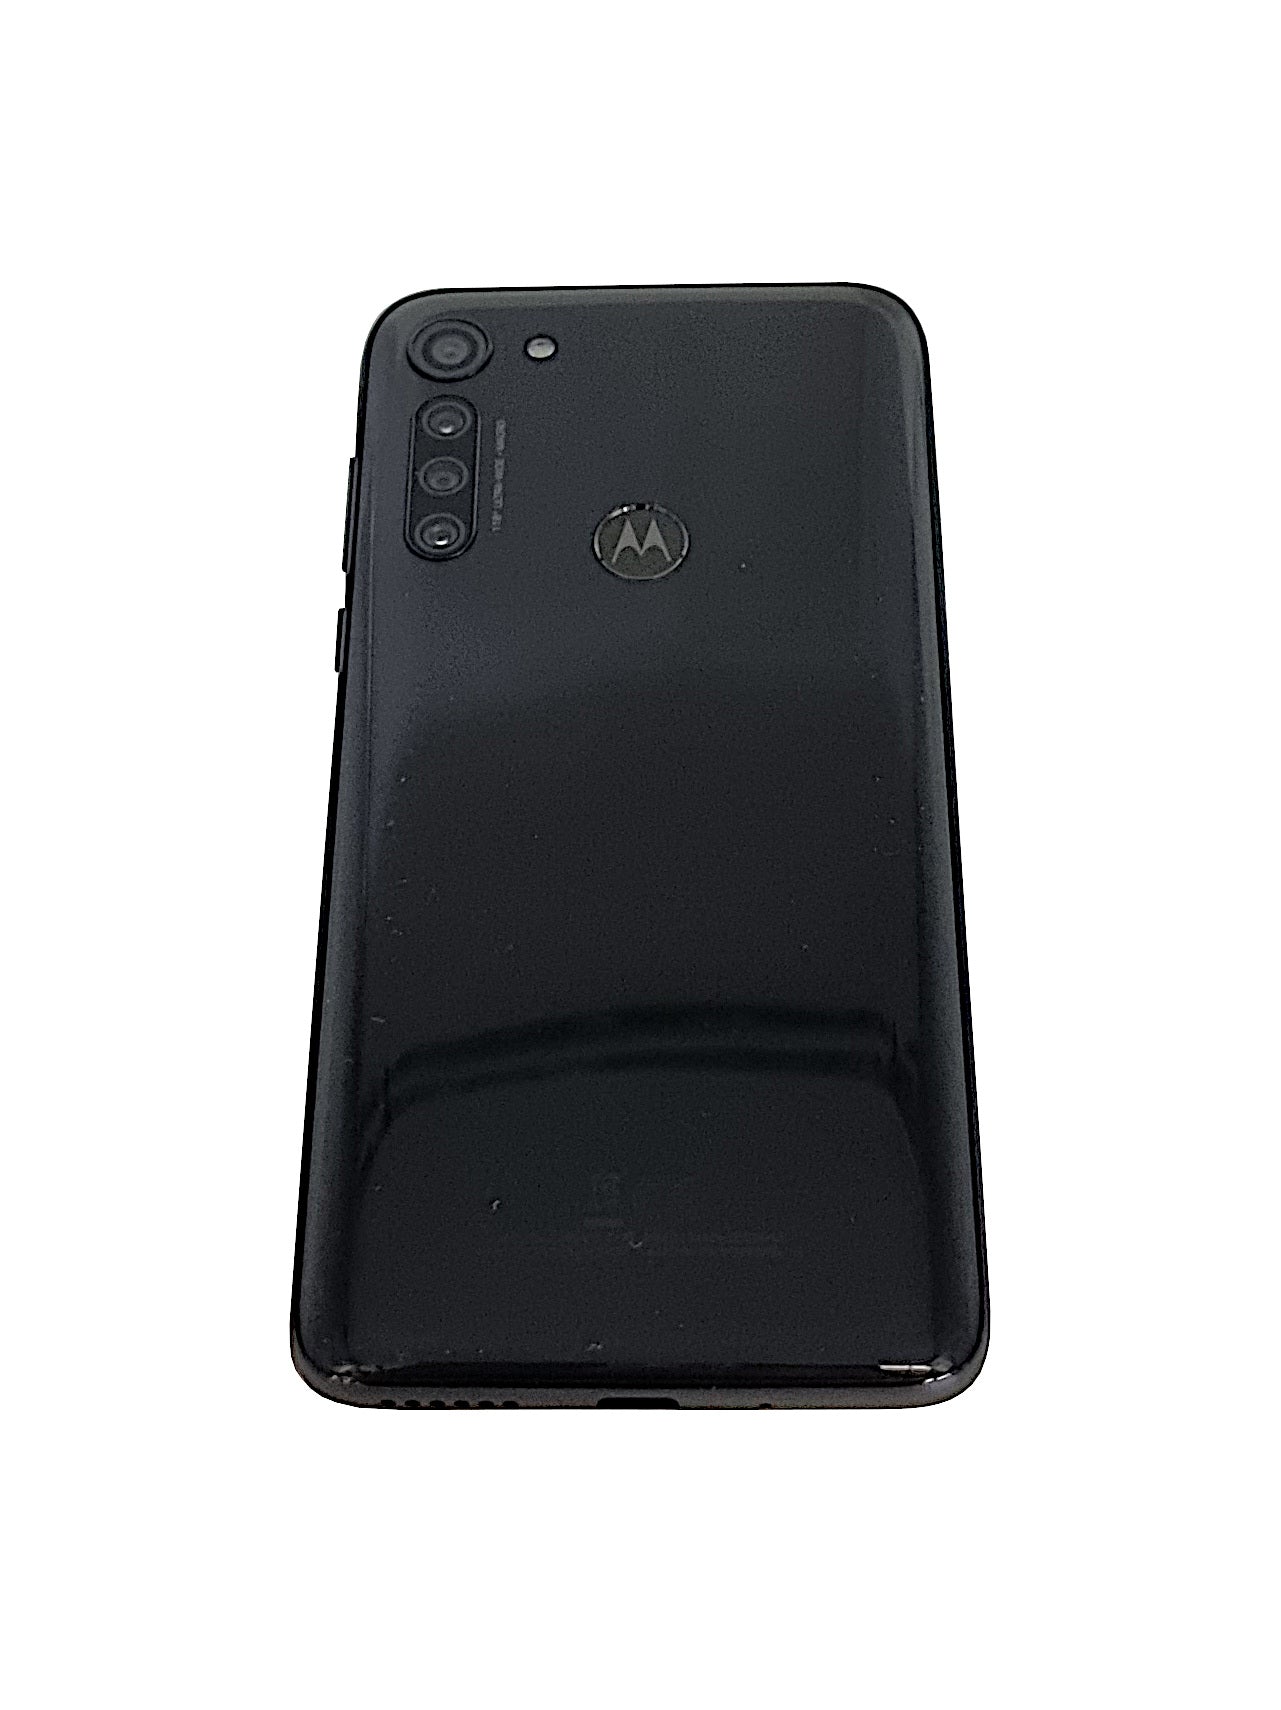 Motorola Moto G8 Power Smartphone, 64Gb, Smoke Black, Network Unlocked, XT2041-3